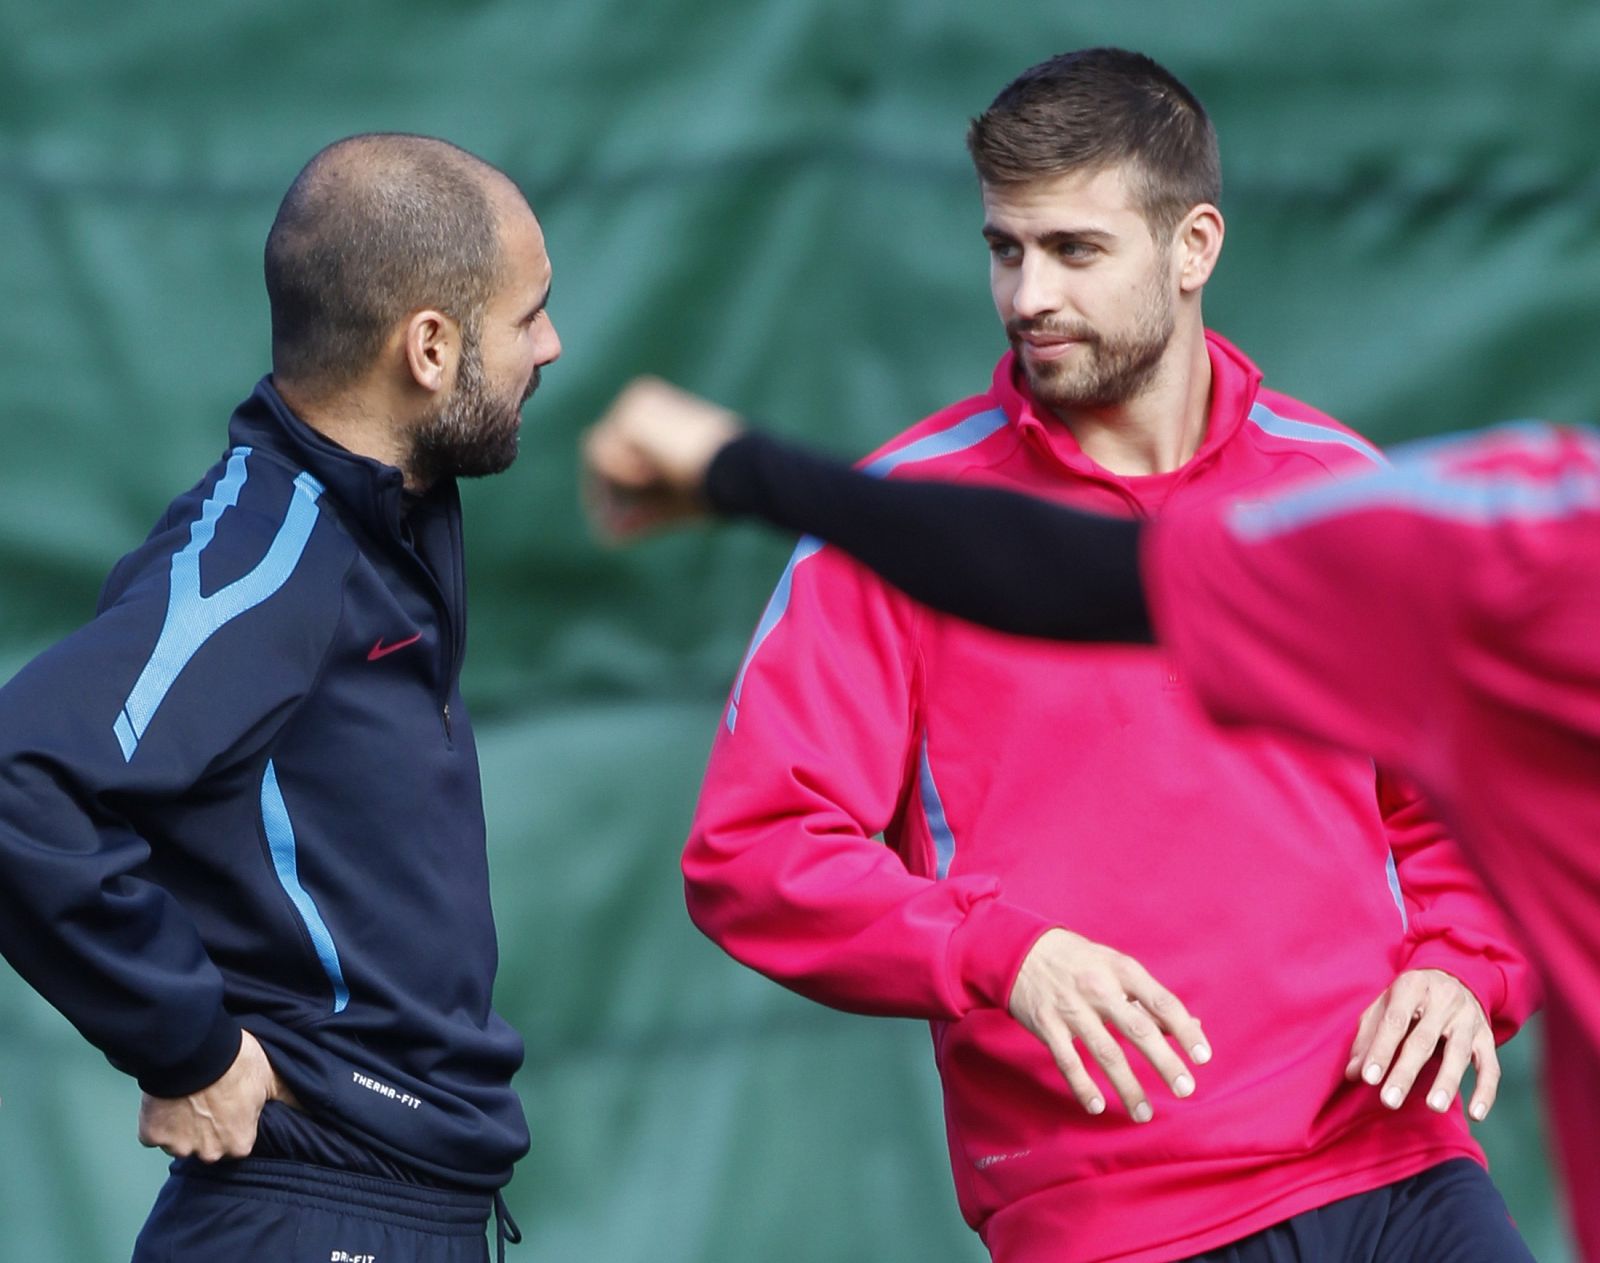 Barcelona's Guardiola talks to Pique during a training session at Ciutat Esportiva Joan Gamper